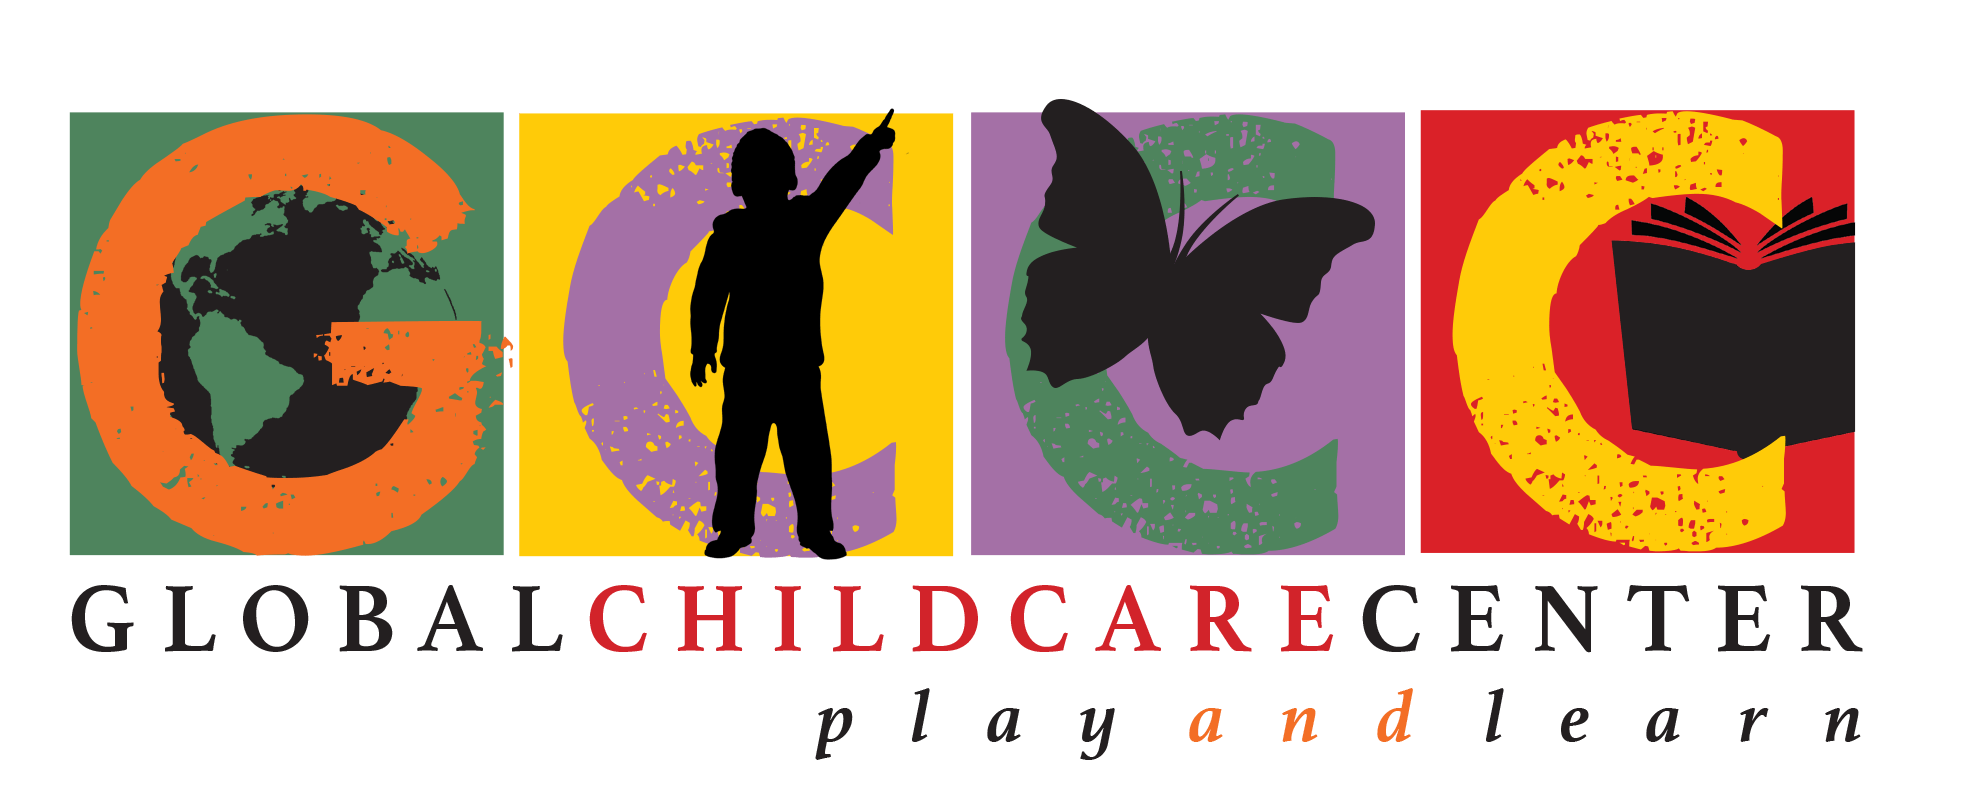 Global Child Care Center